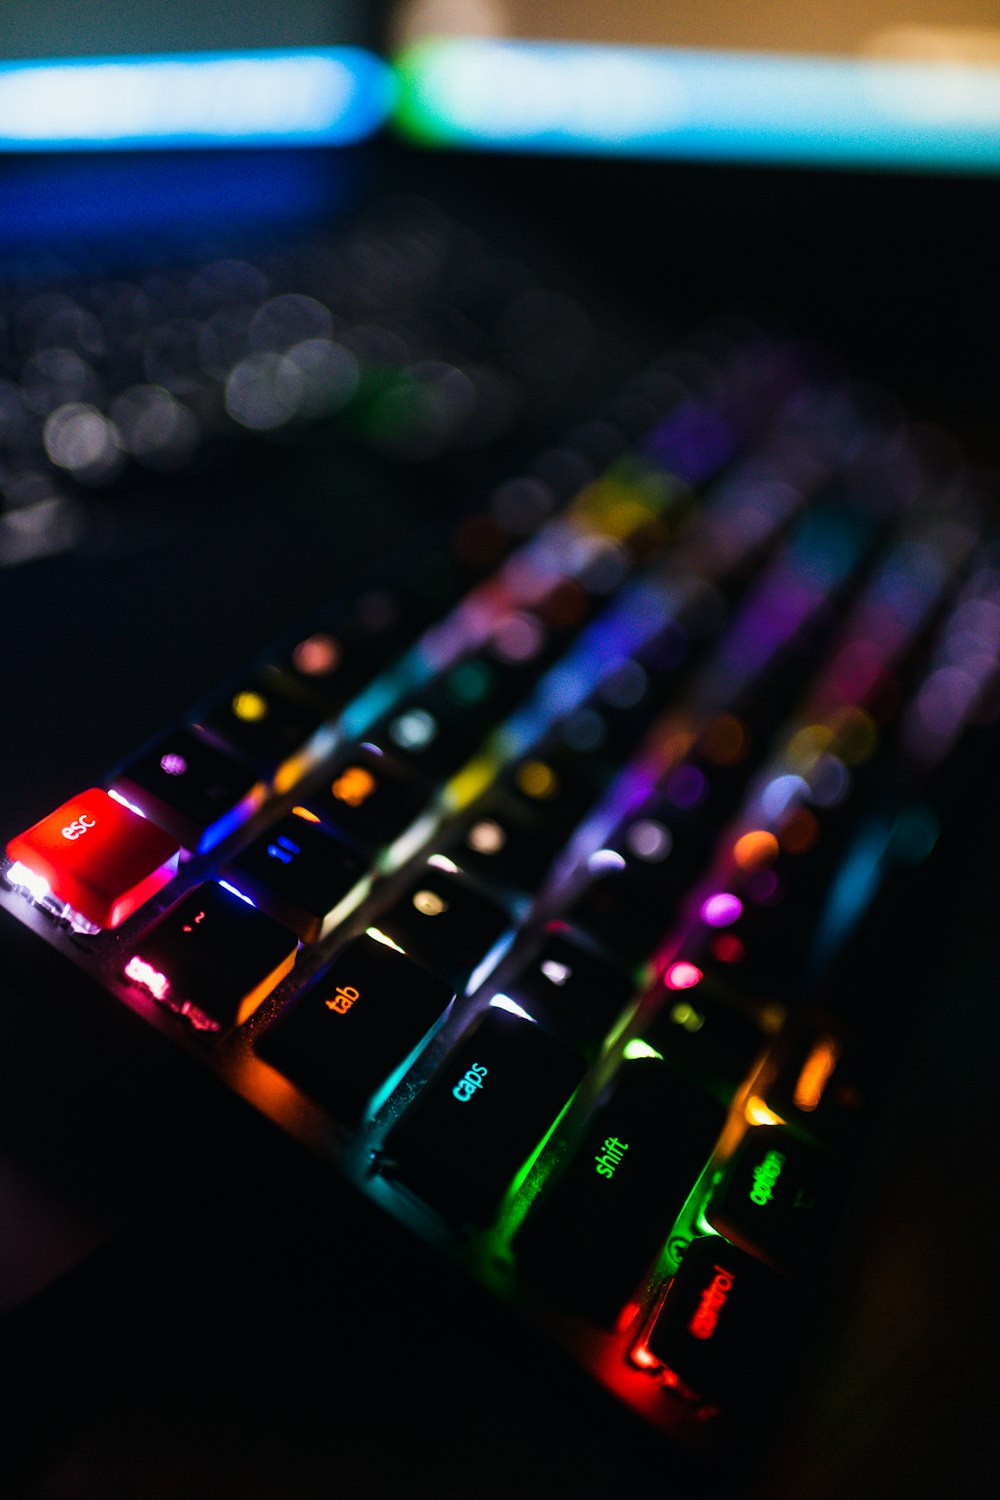 a close-up of a computer keyboard